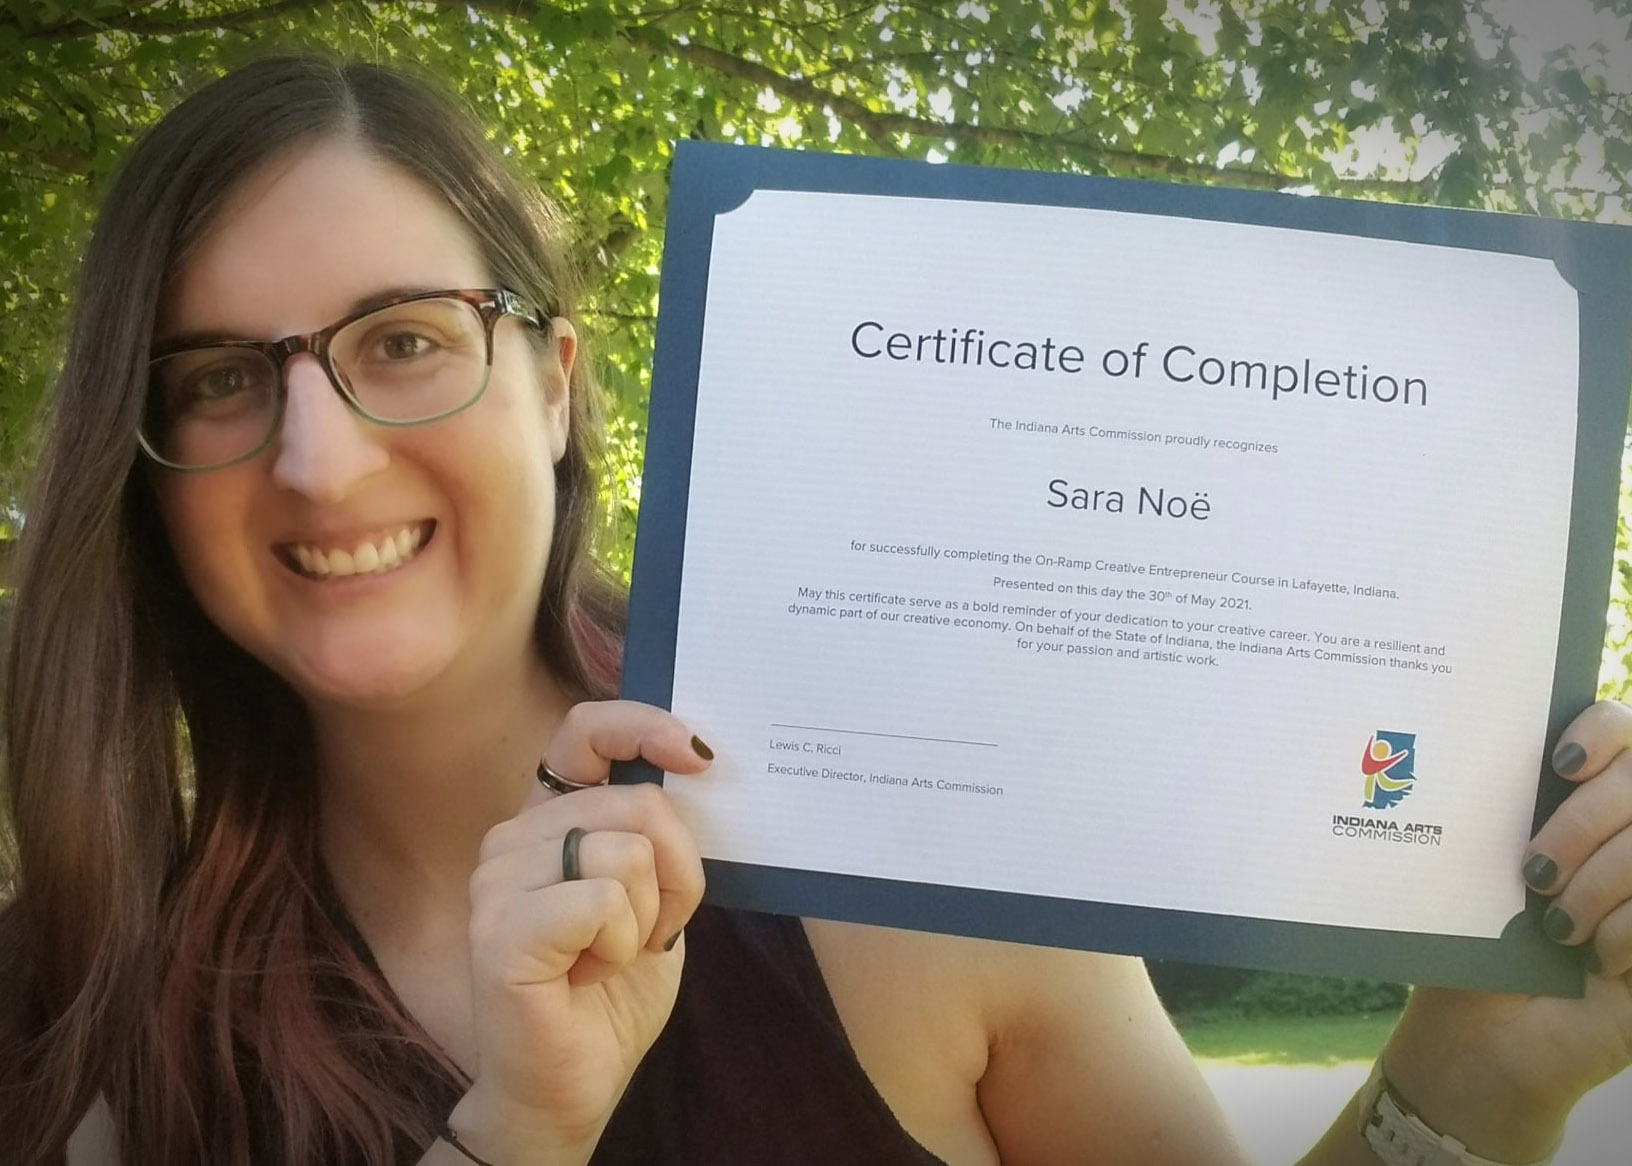 Author Sara A. Noe with On Ramp Creative Entrepreneur Accelerator certificate